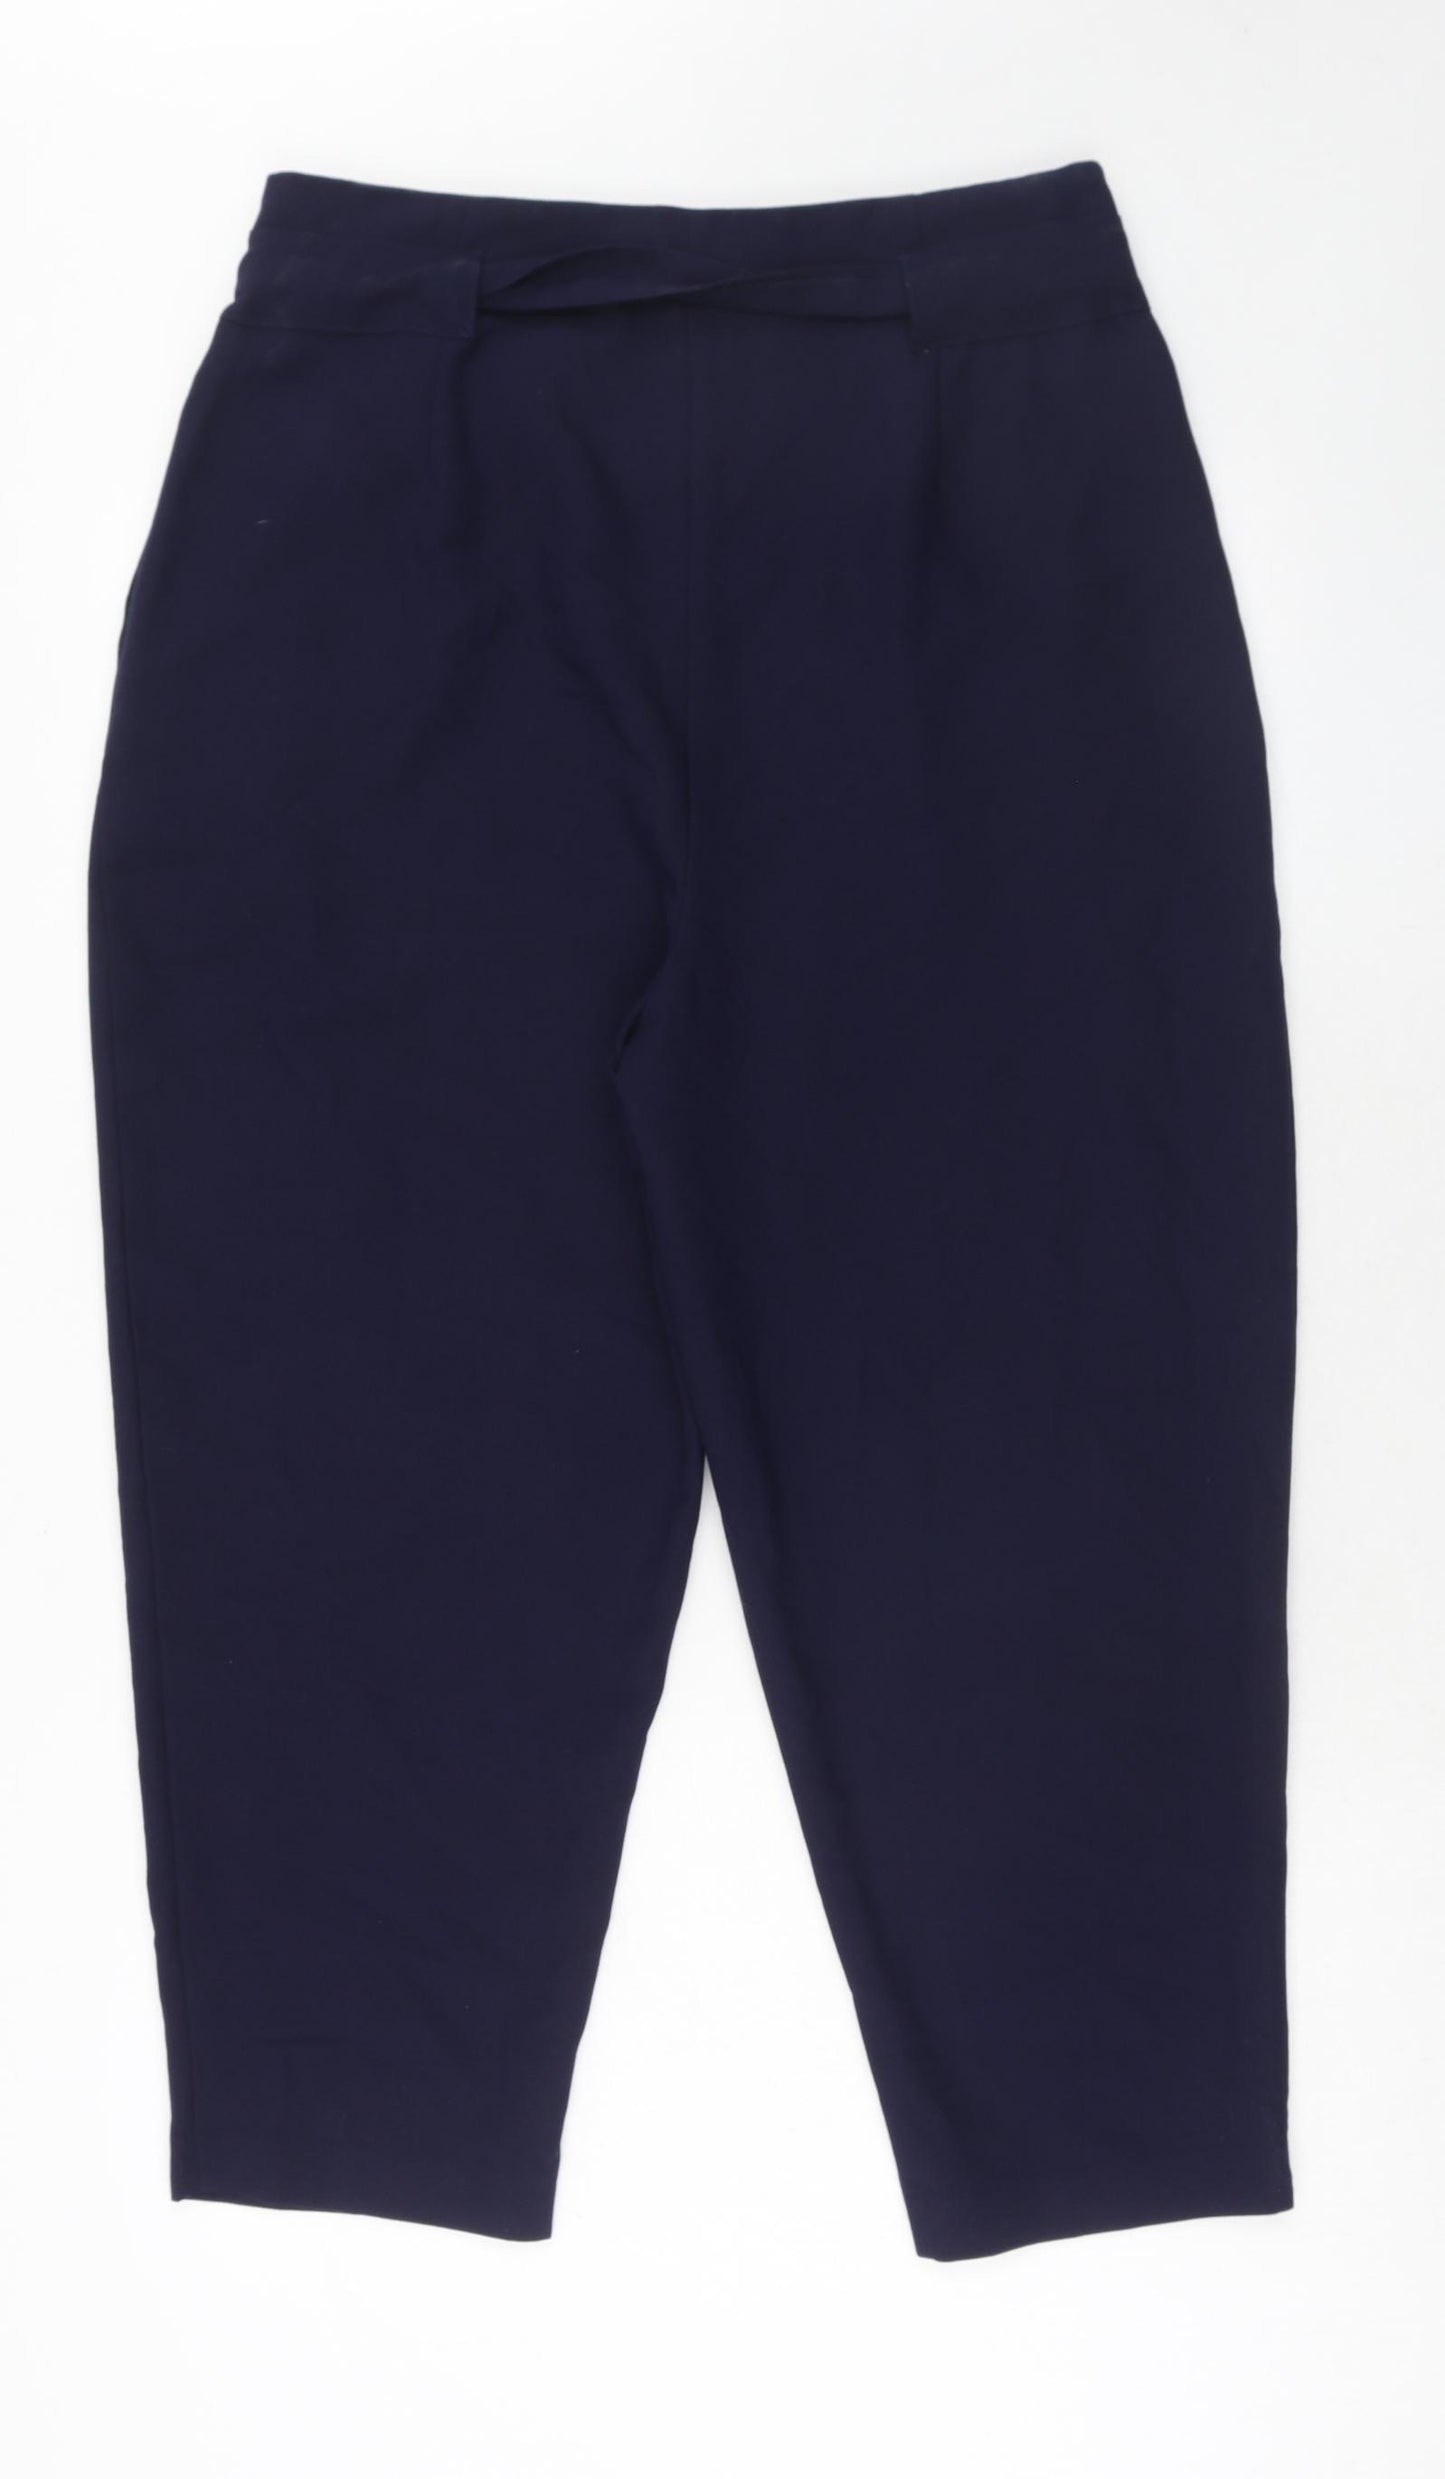 ASOS Womens Blue Polyester Trousers Size 14 Regular Zip